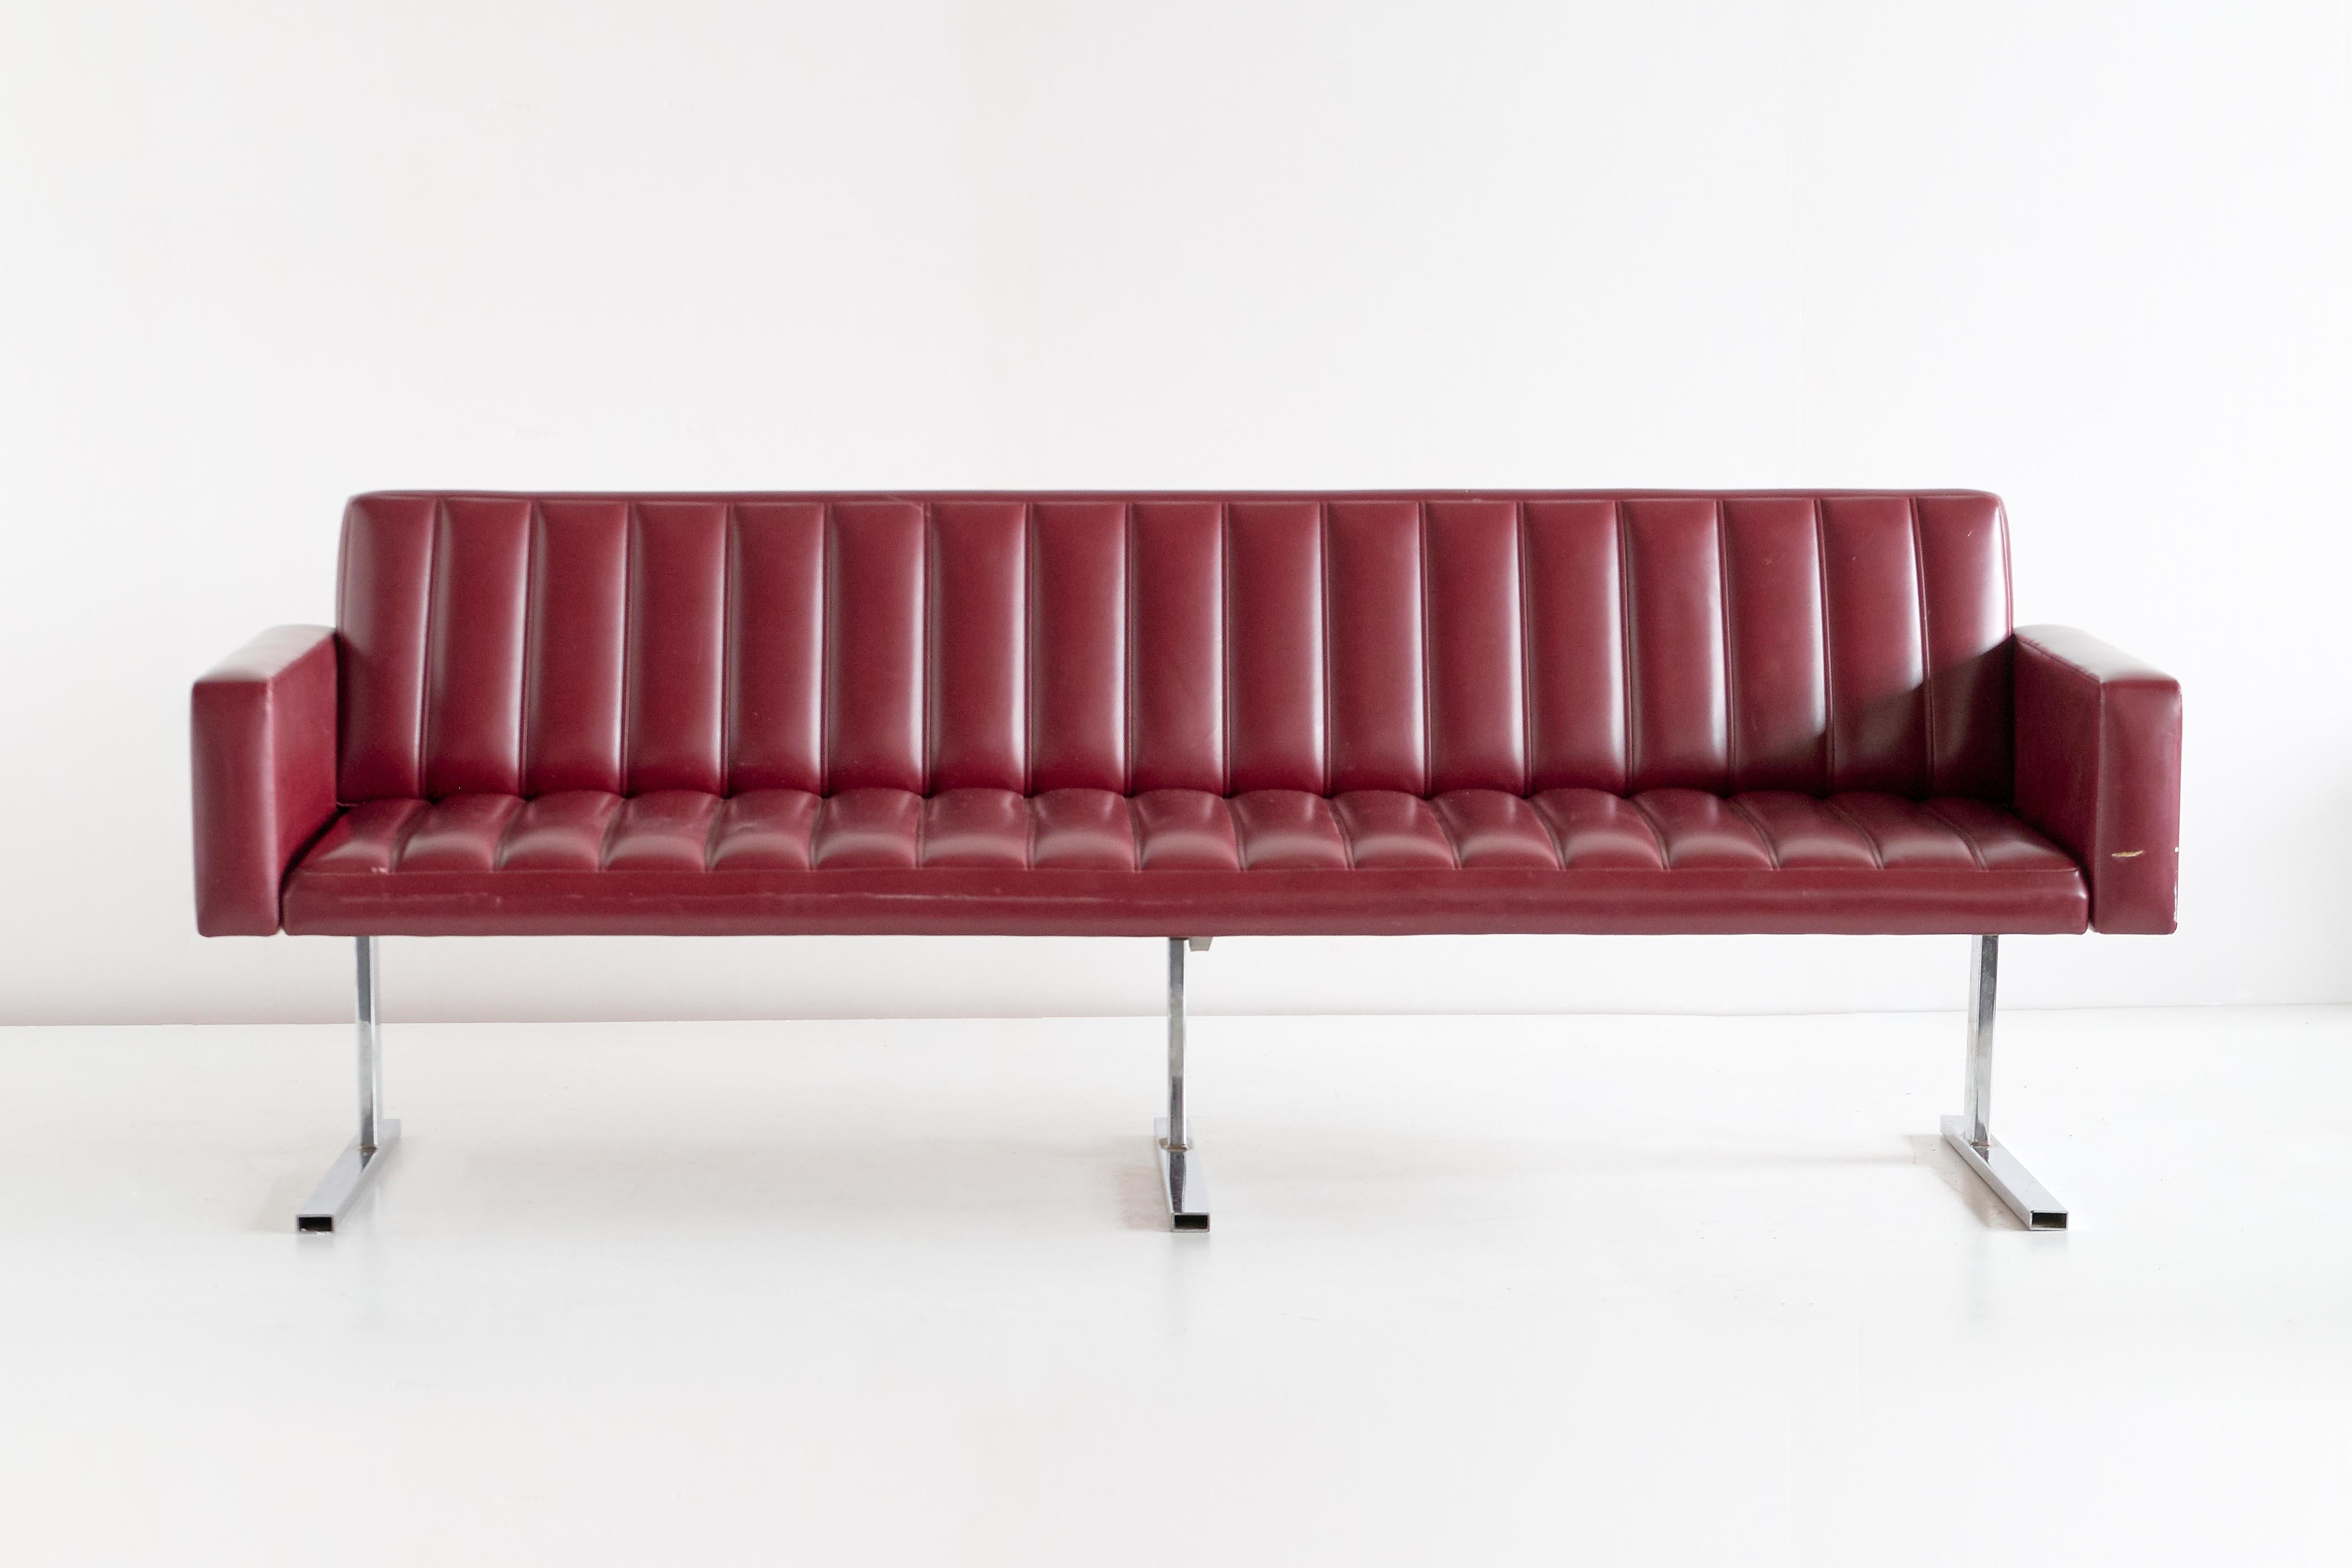 Scandinavian Modern Esko Pajamies Three-Seat Cantilevered Sofa, Merva, Finland, 1960s For Sale